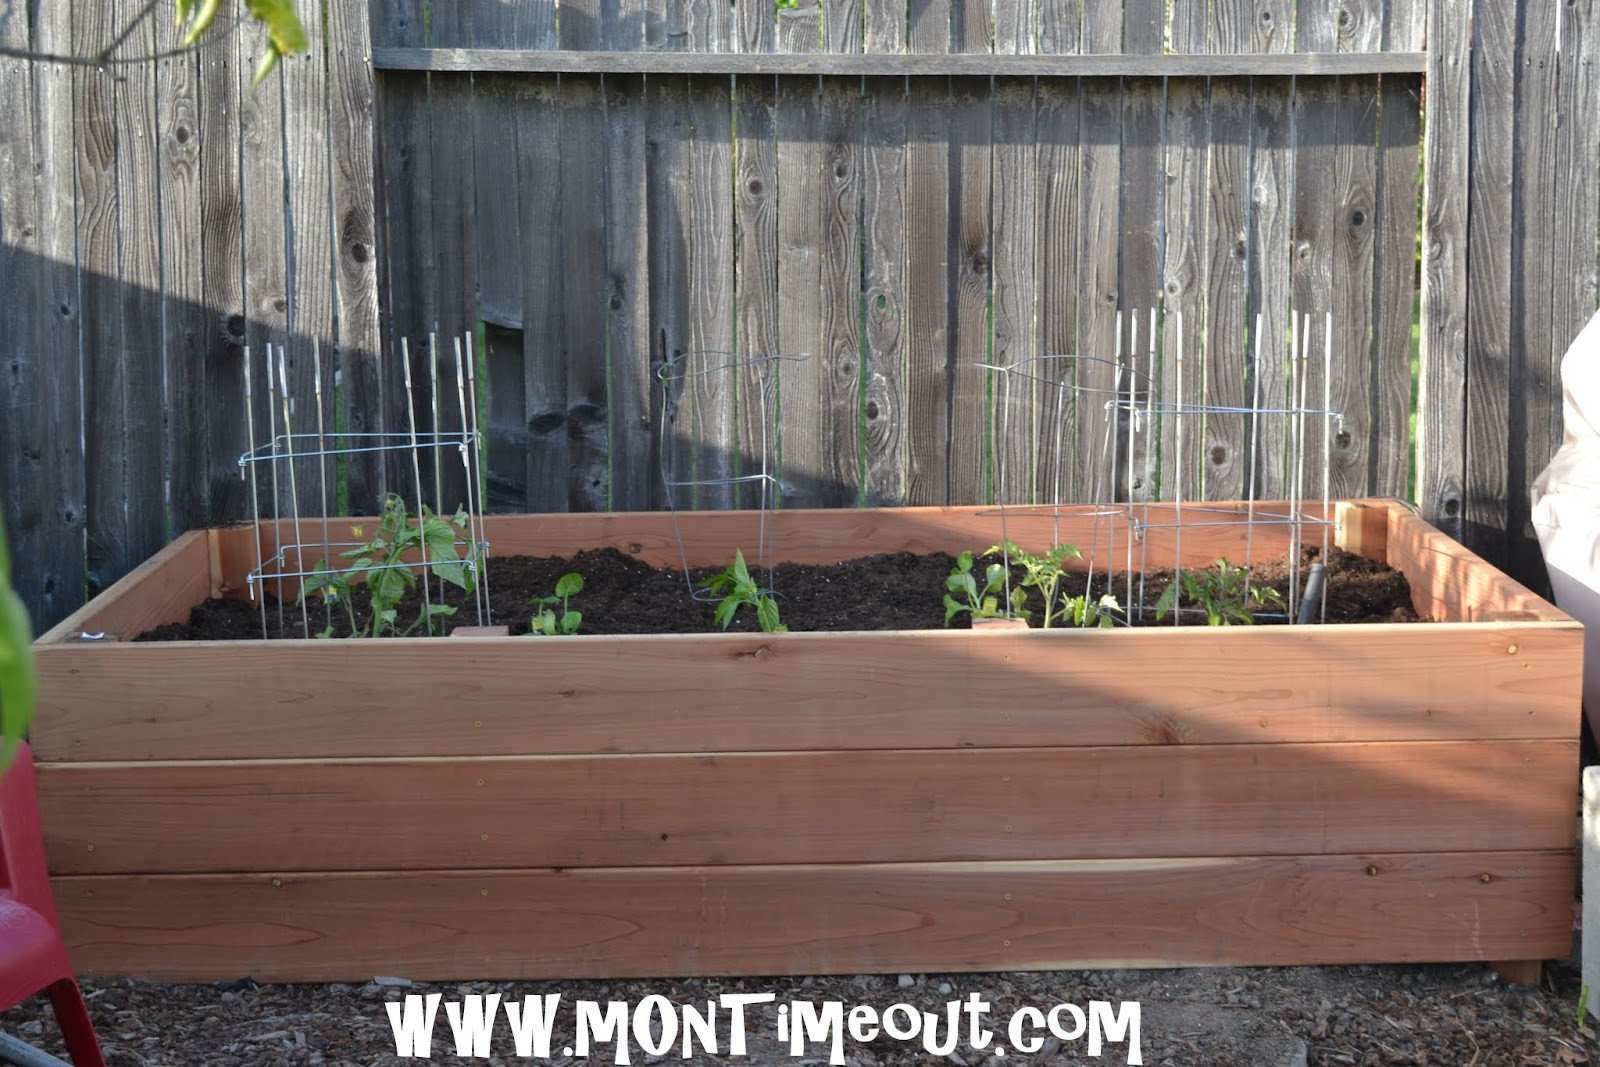 Best ideas about Diy Garden Planters
. Save or Pin DIY Garden Planter Box Tutorial Now.